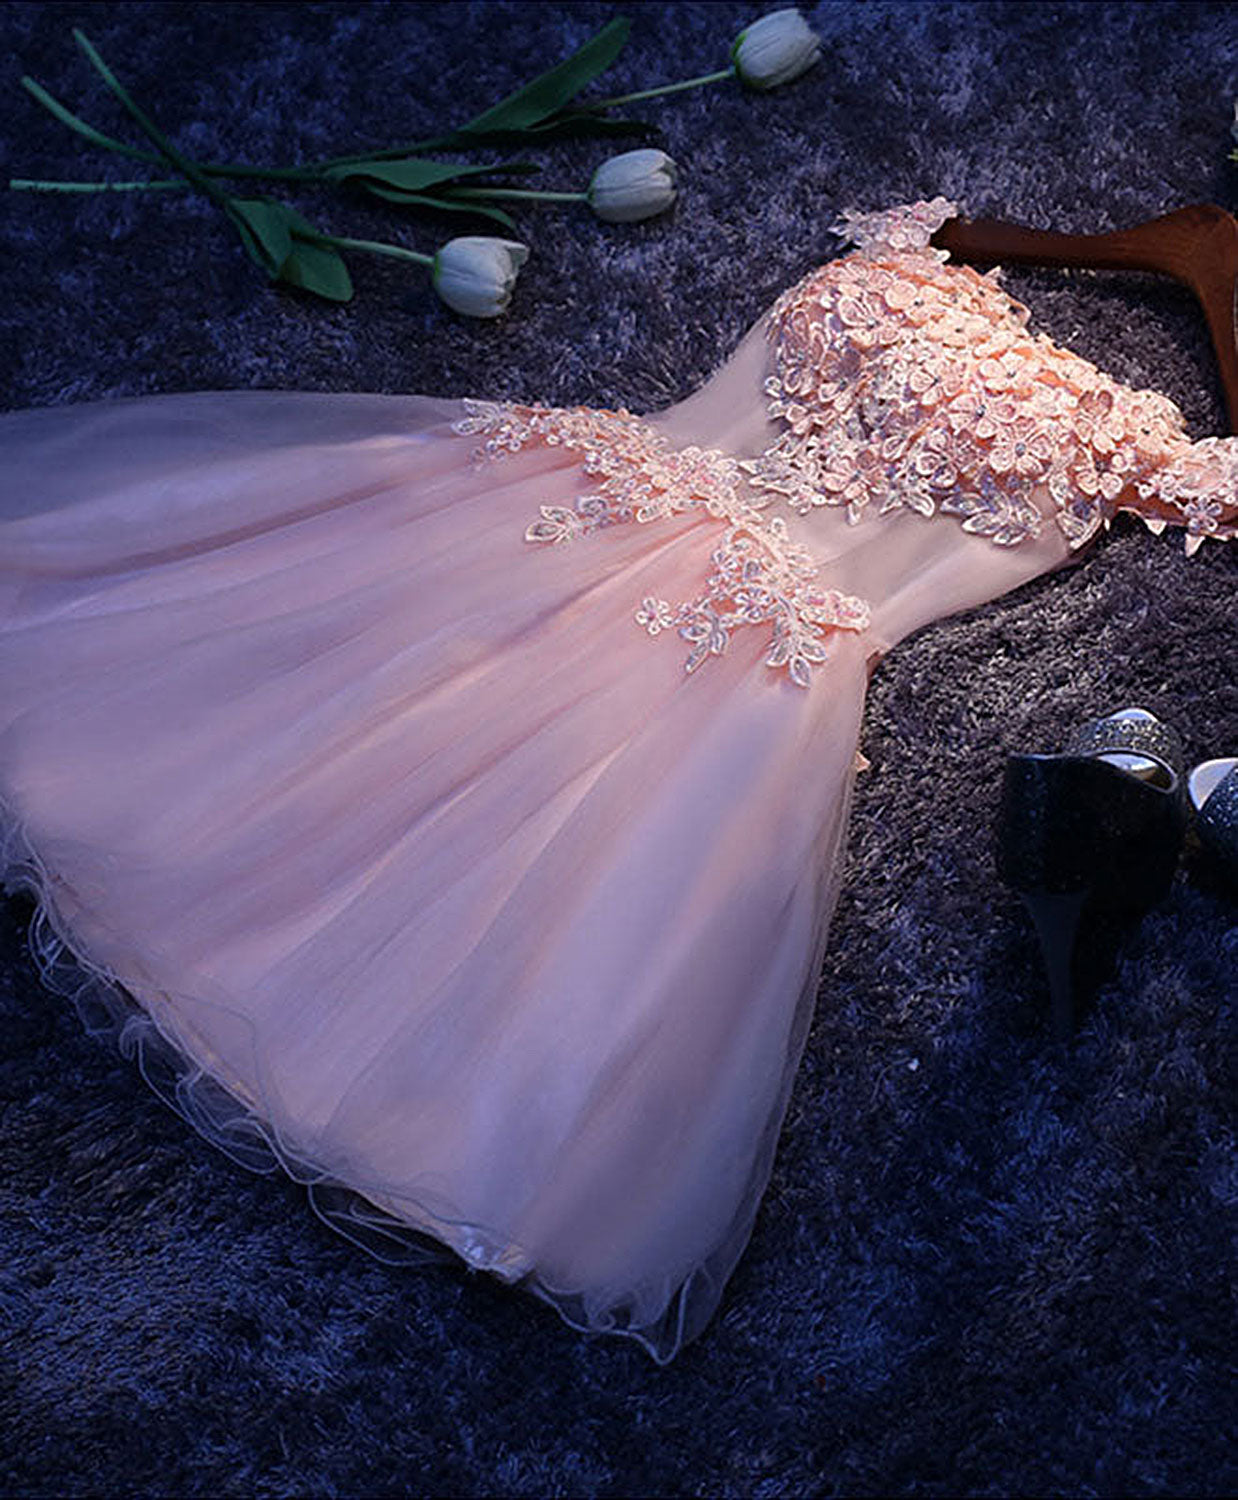 shopluu Pink Tulle 3D Flowers Long Prom Dress, Pink Long Graduation Dresses US 4 / Pink